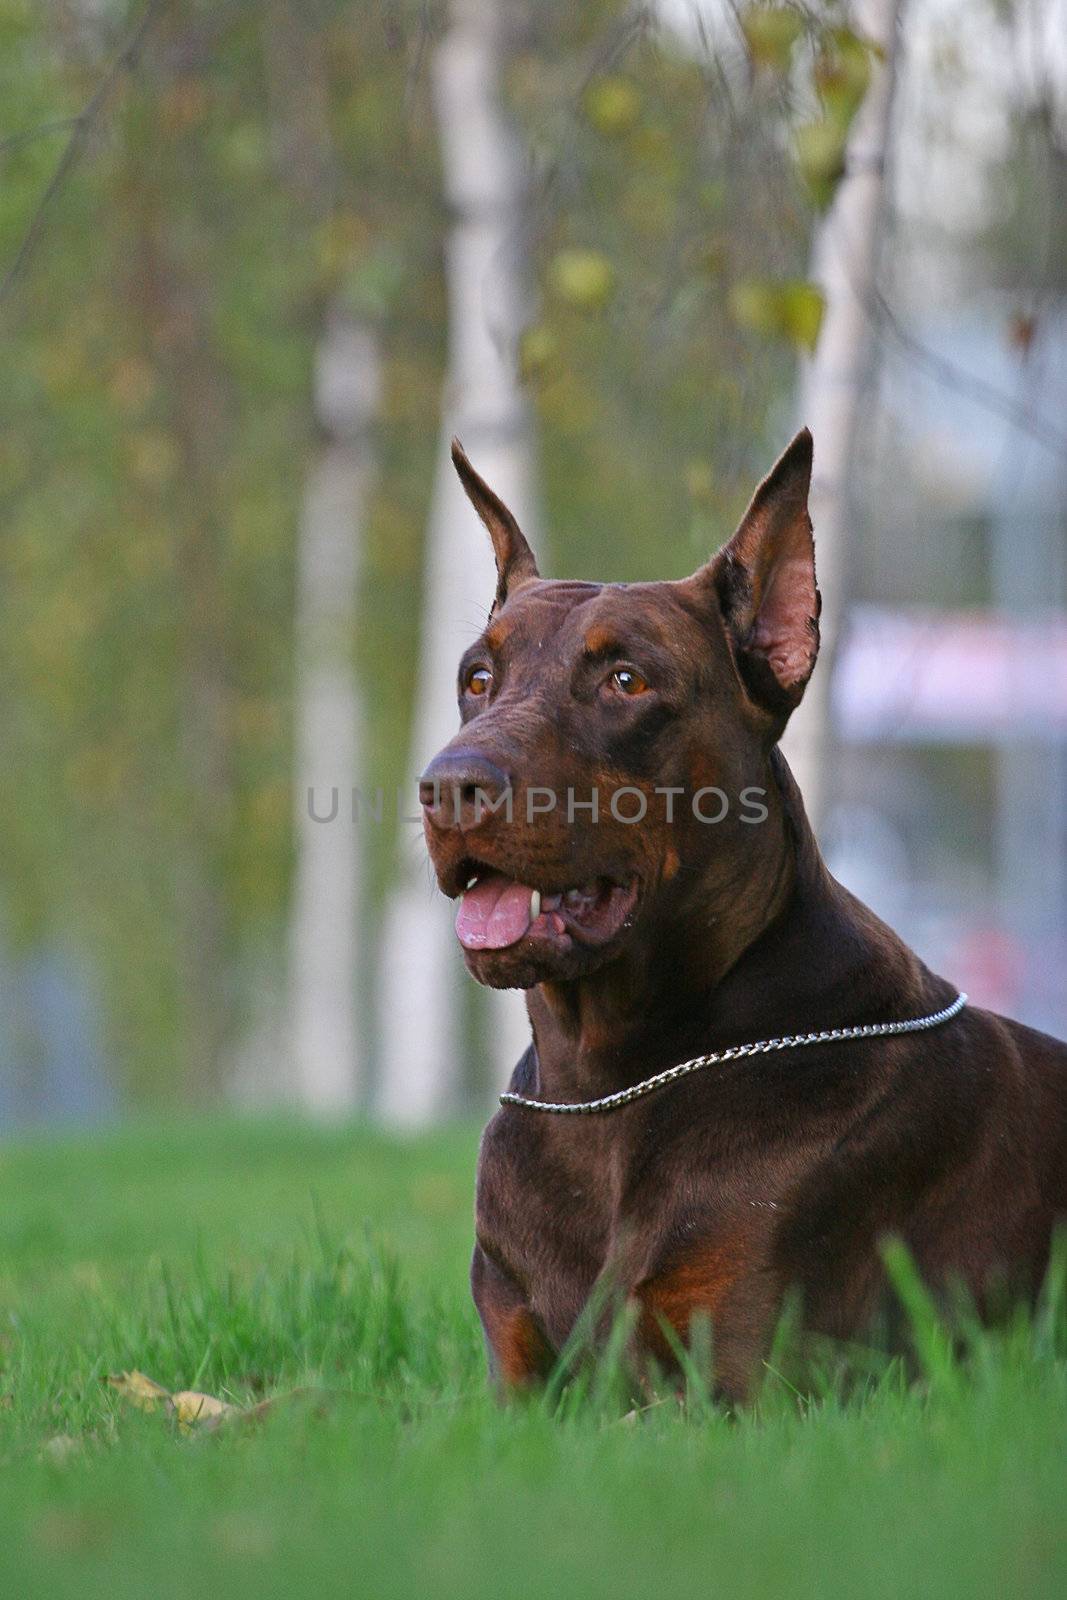 Doberman dog in grass by gsdonlin